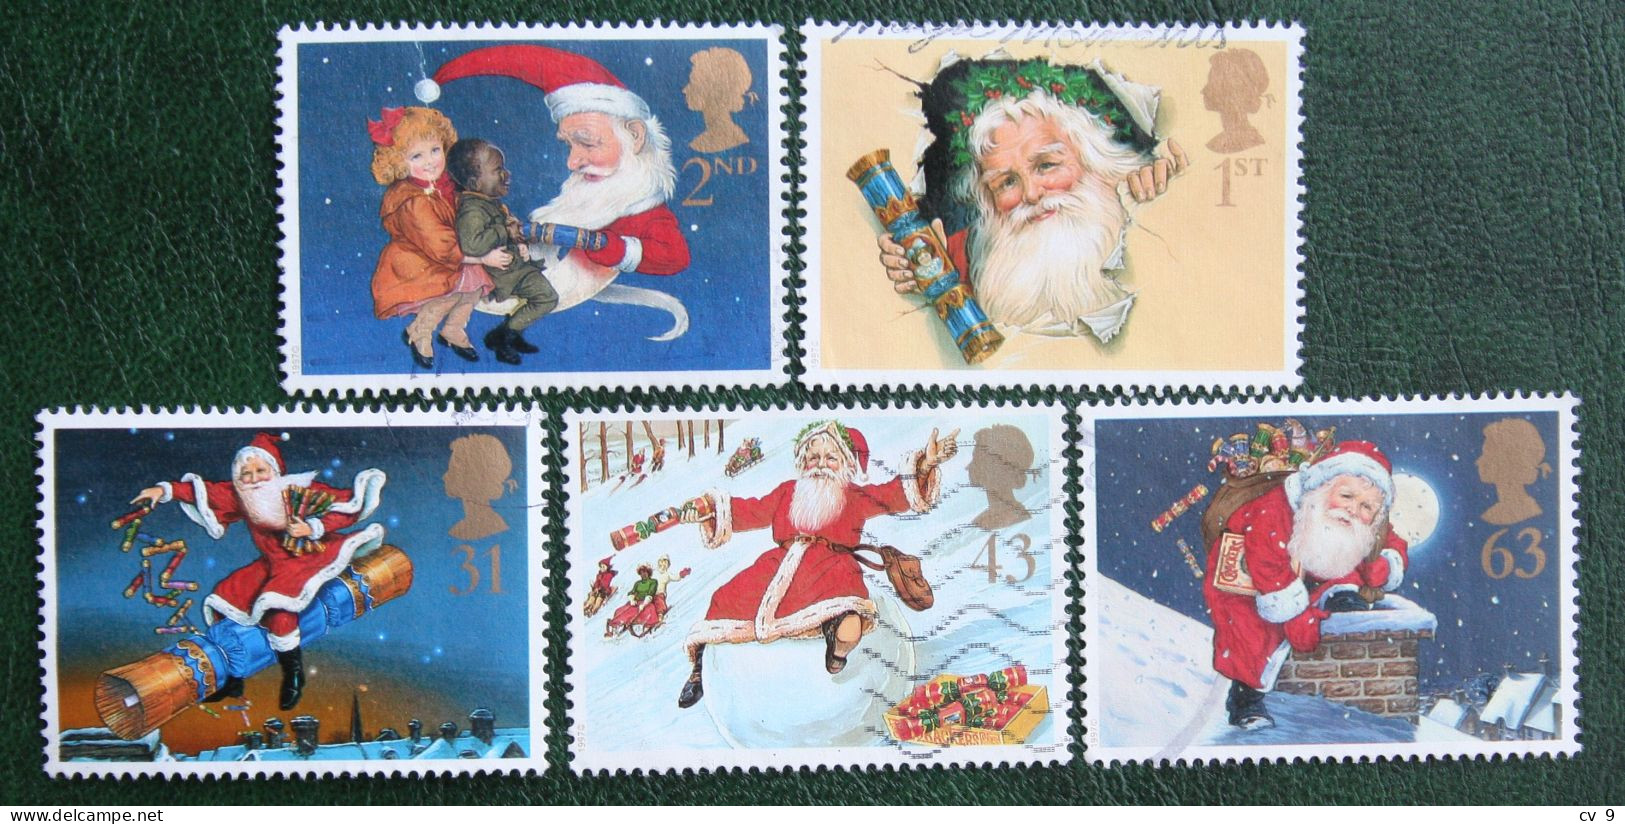 Natale Weihnachten Xmas Noel Kerst (Mi 1714-1718) 1997 Used Gebruikt Oblitere ENGLAND GRANDE-BRETAGNE GB GREAT BRITAIN - Oblitérés